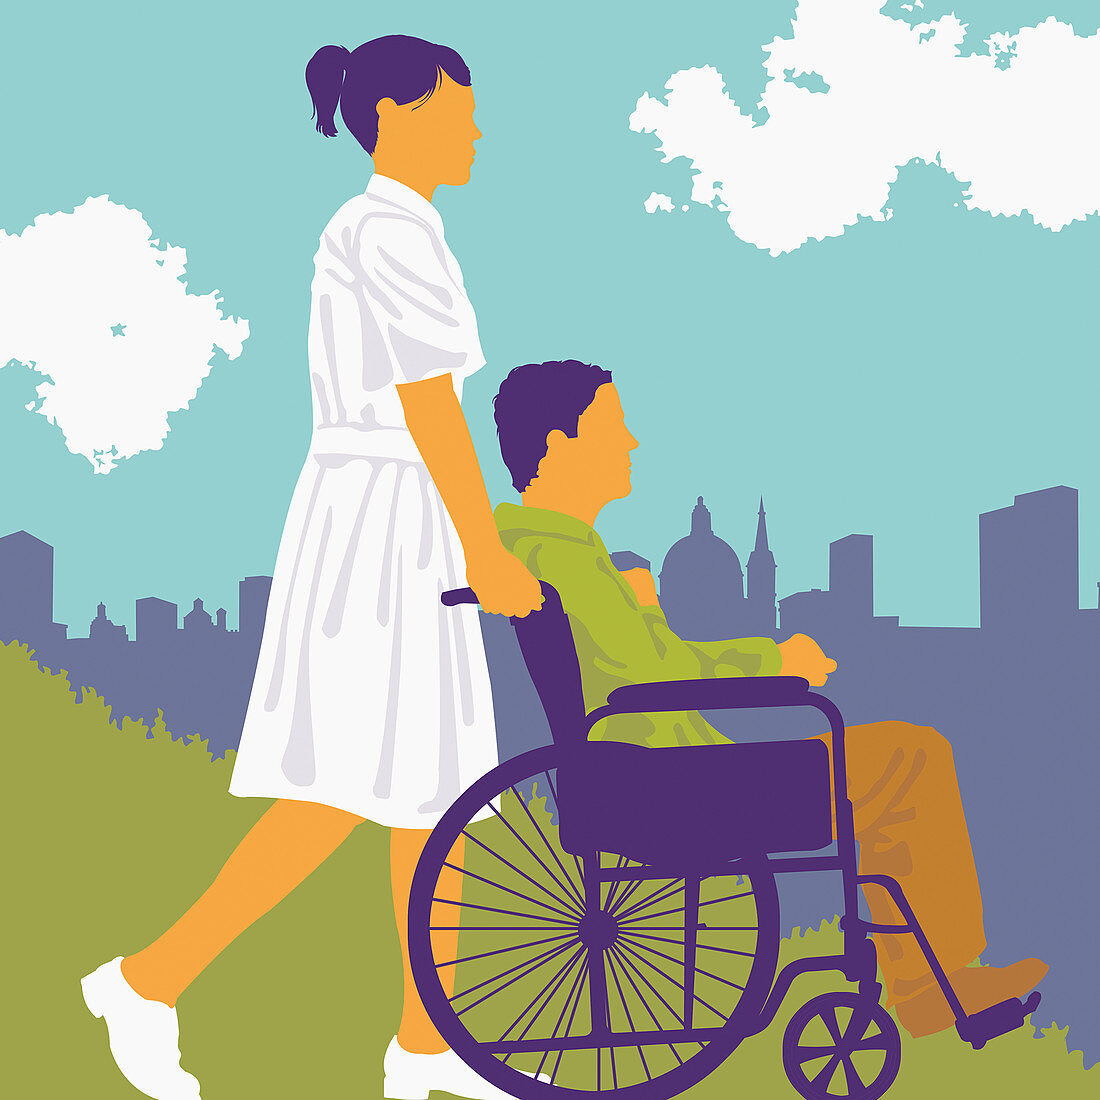 Nurse pushing patient in city park, illustration